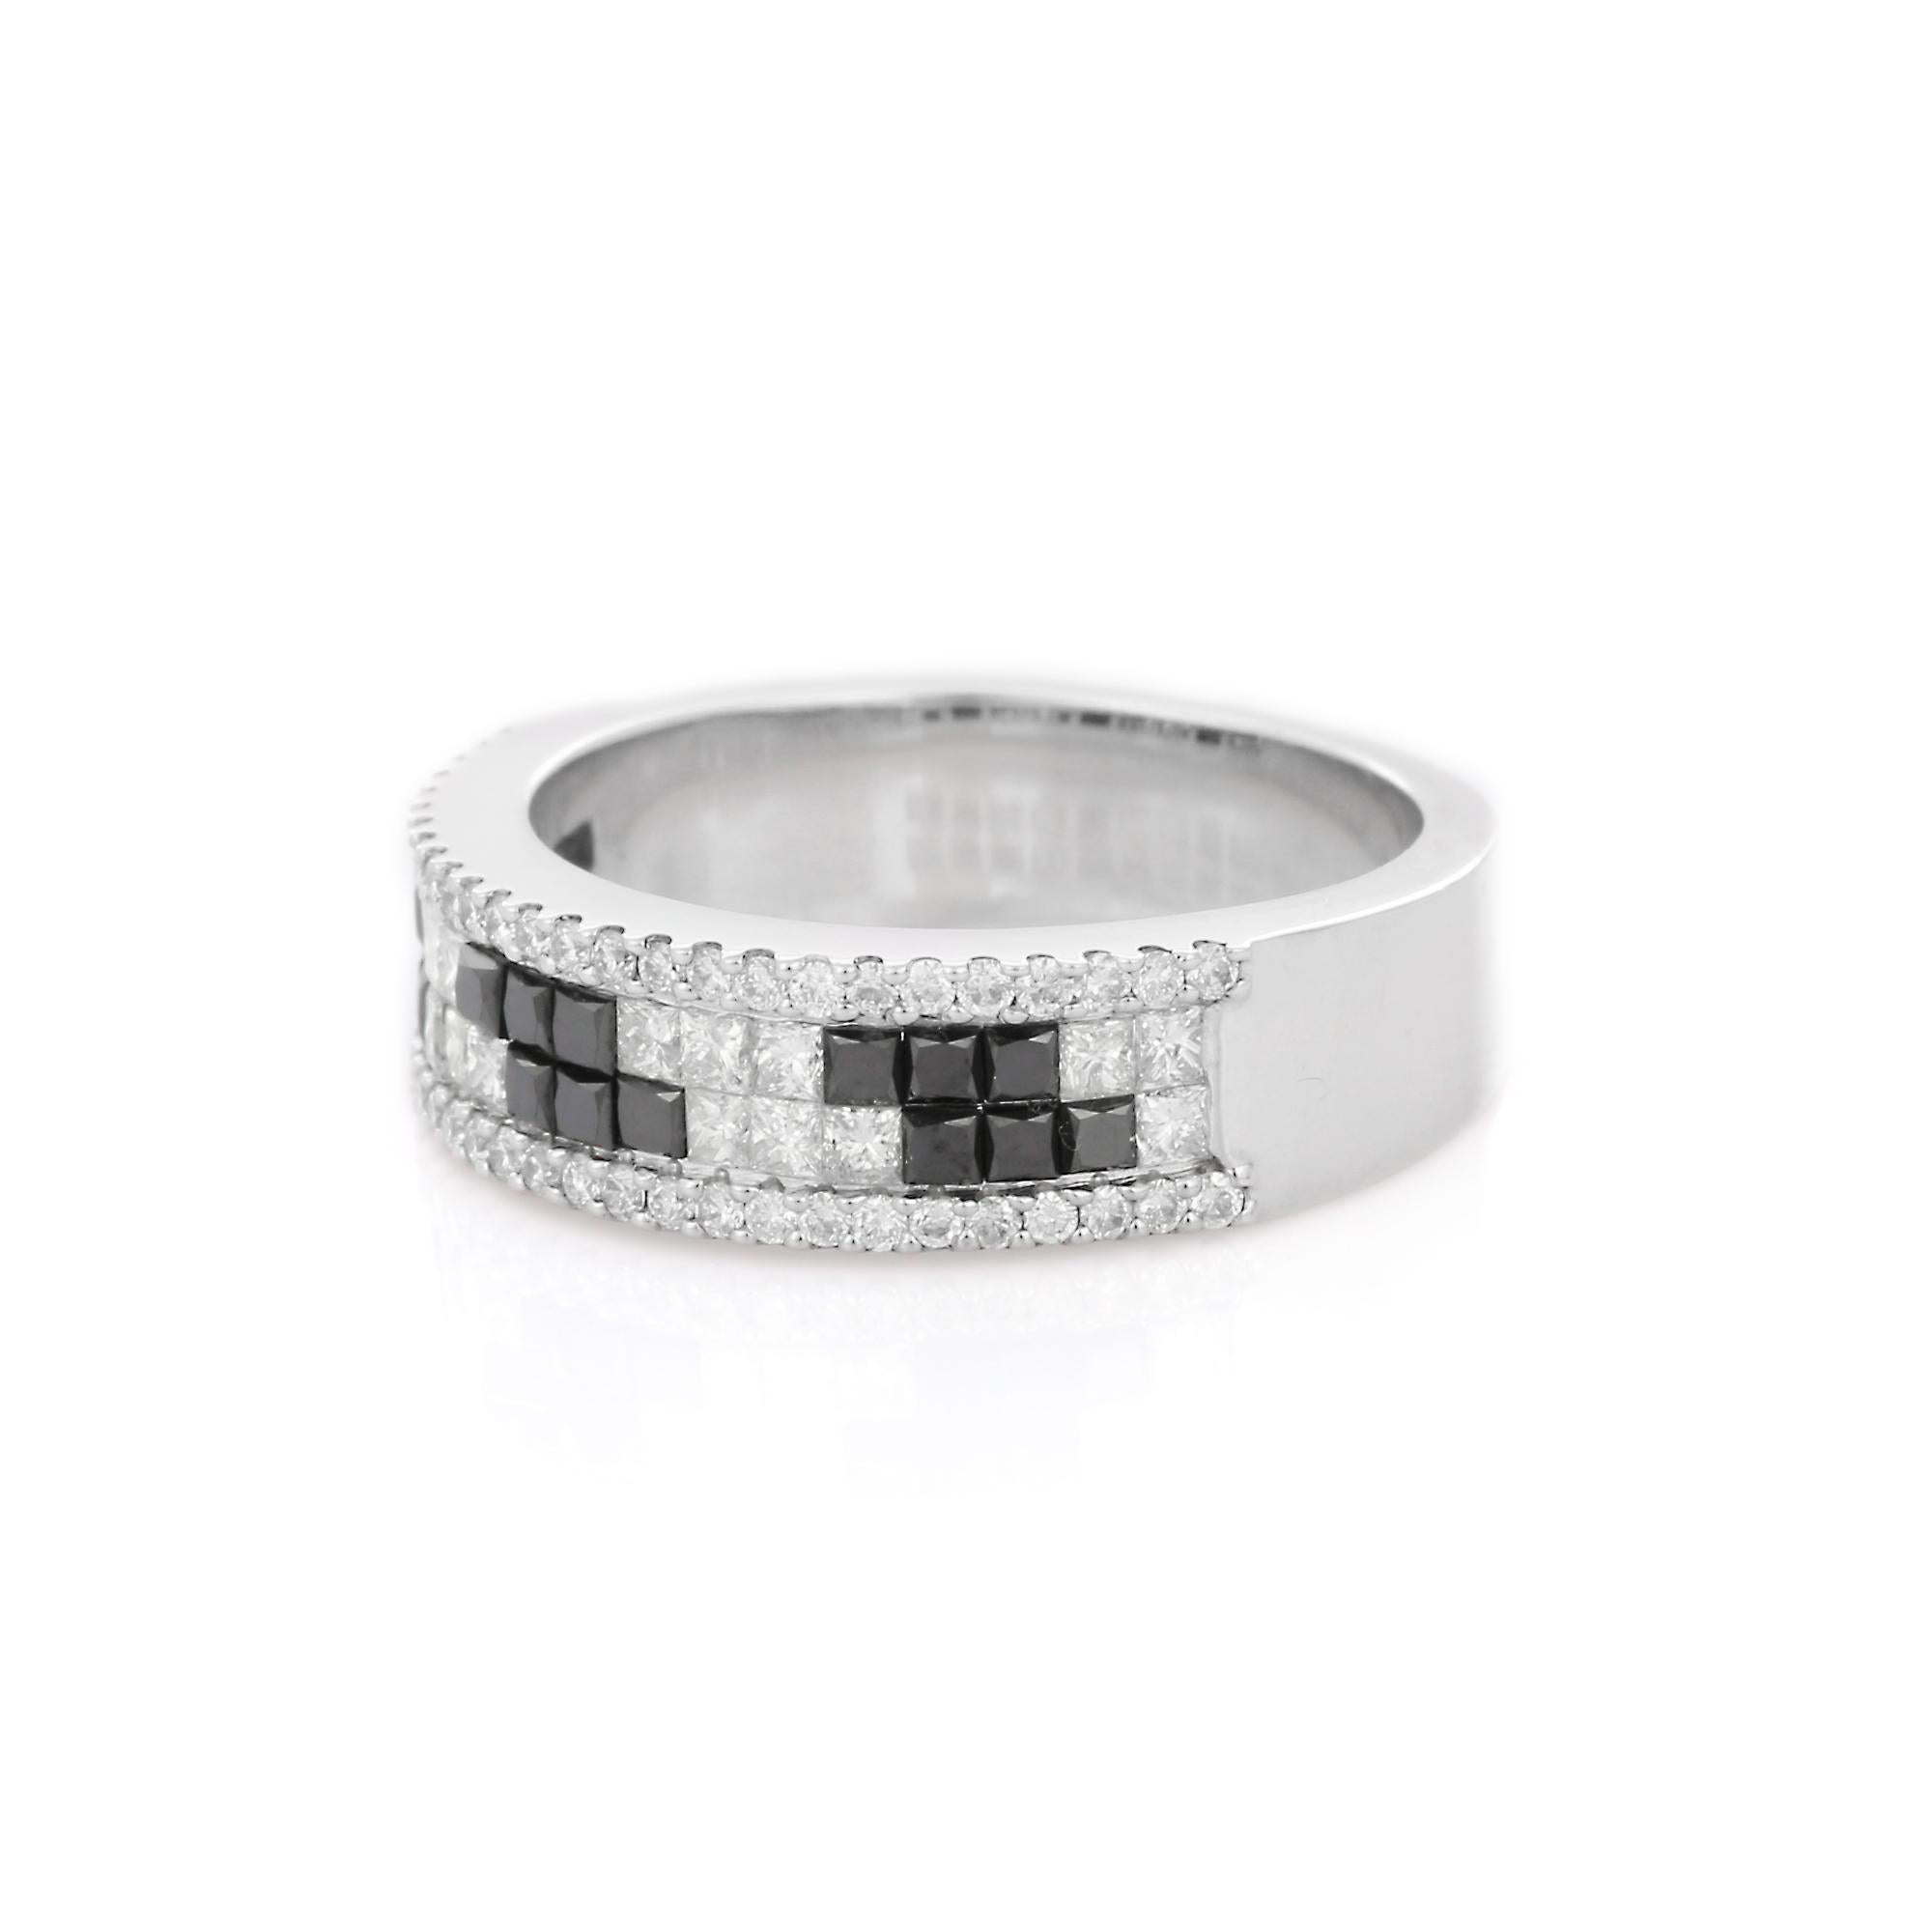 For Sale:  Unisex Black White Diamond Engagement Band Ring in 18K White Gold  3